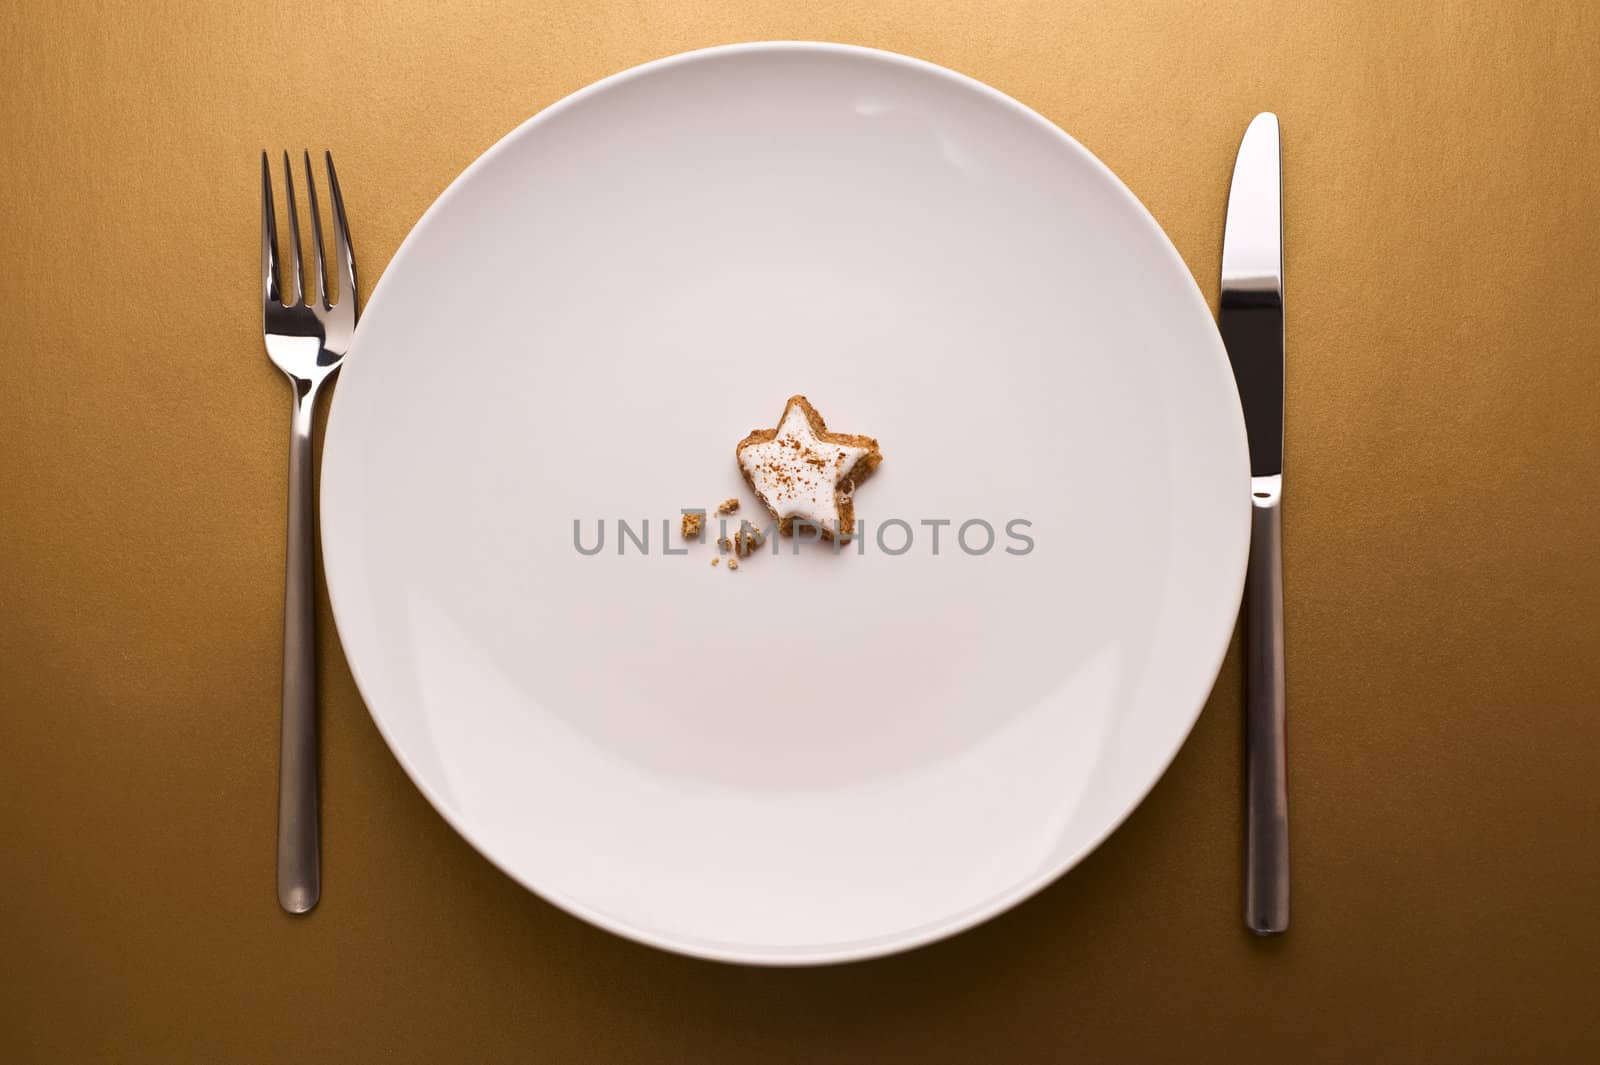 glazed nut cookie on dish on gold background